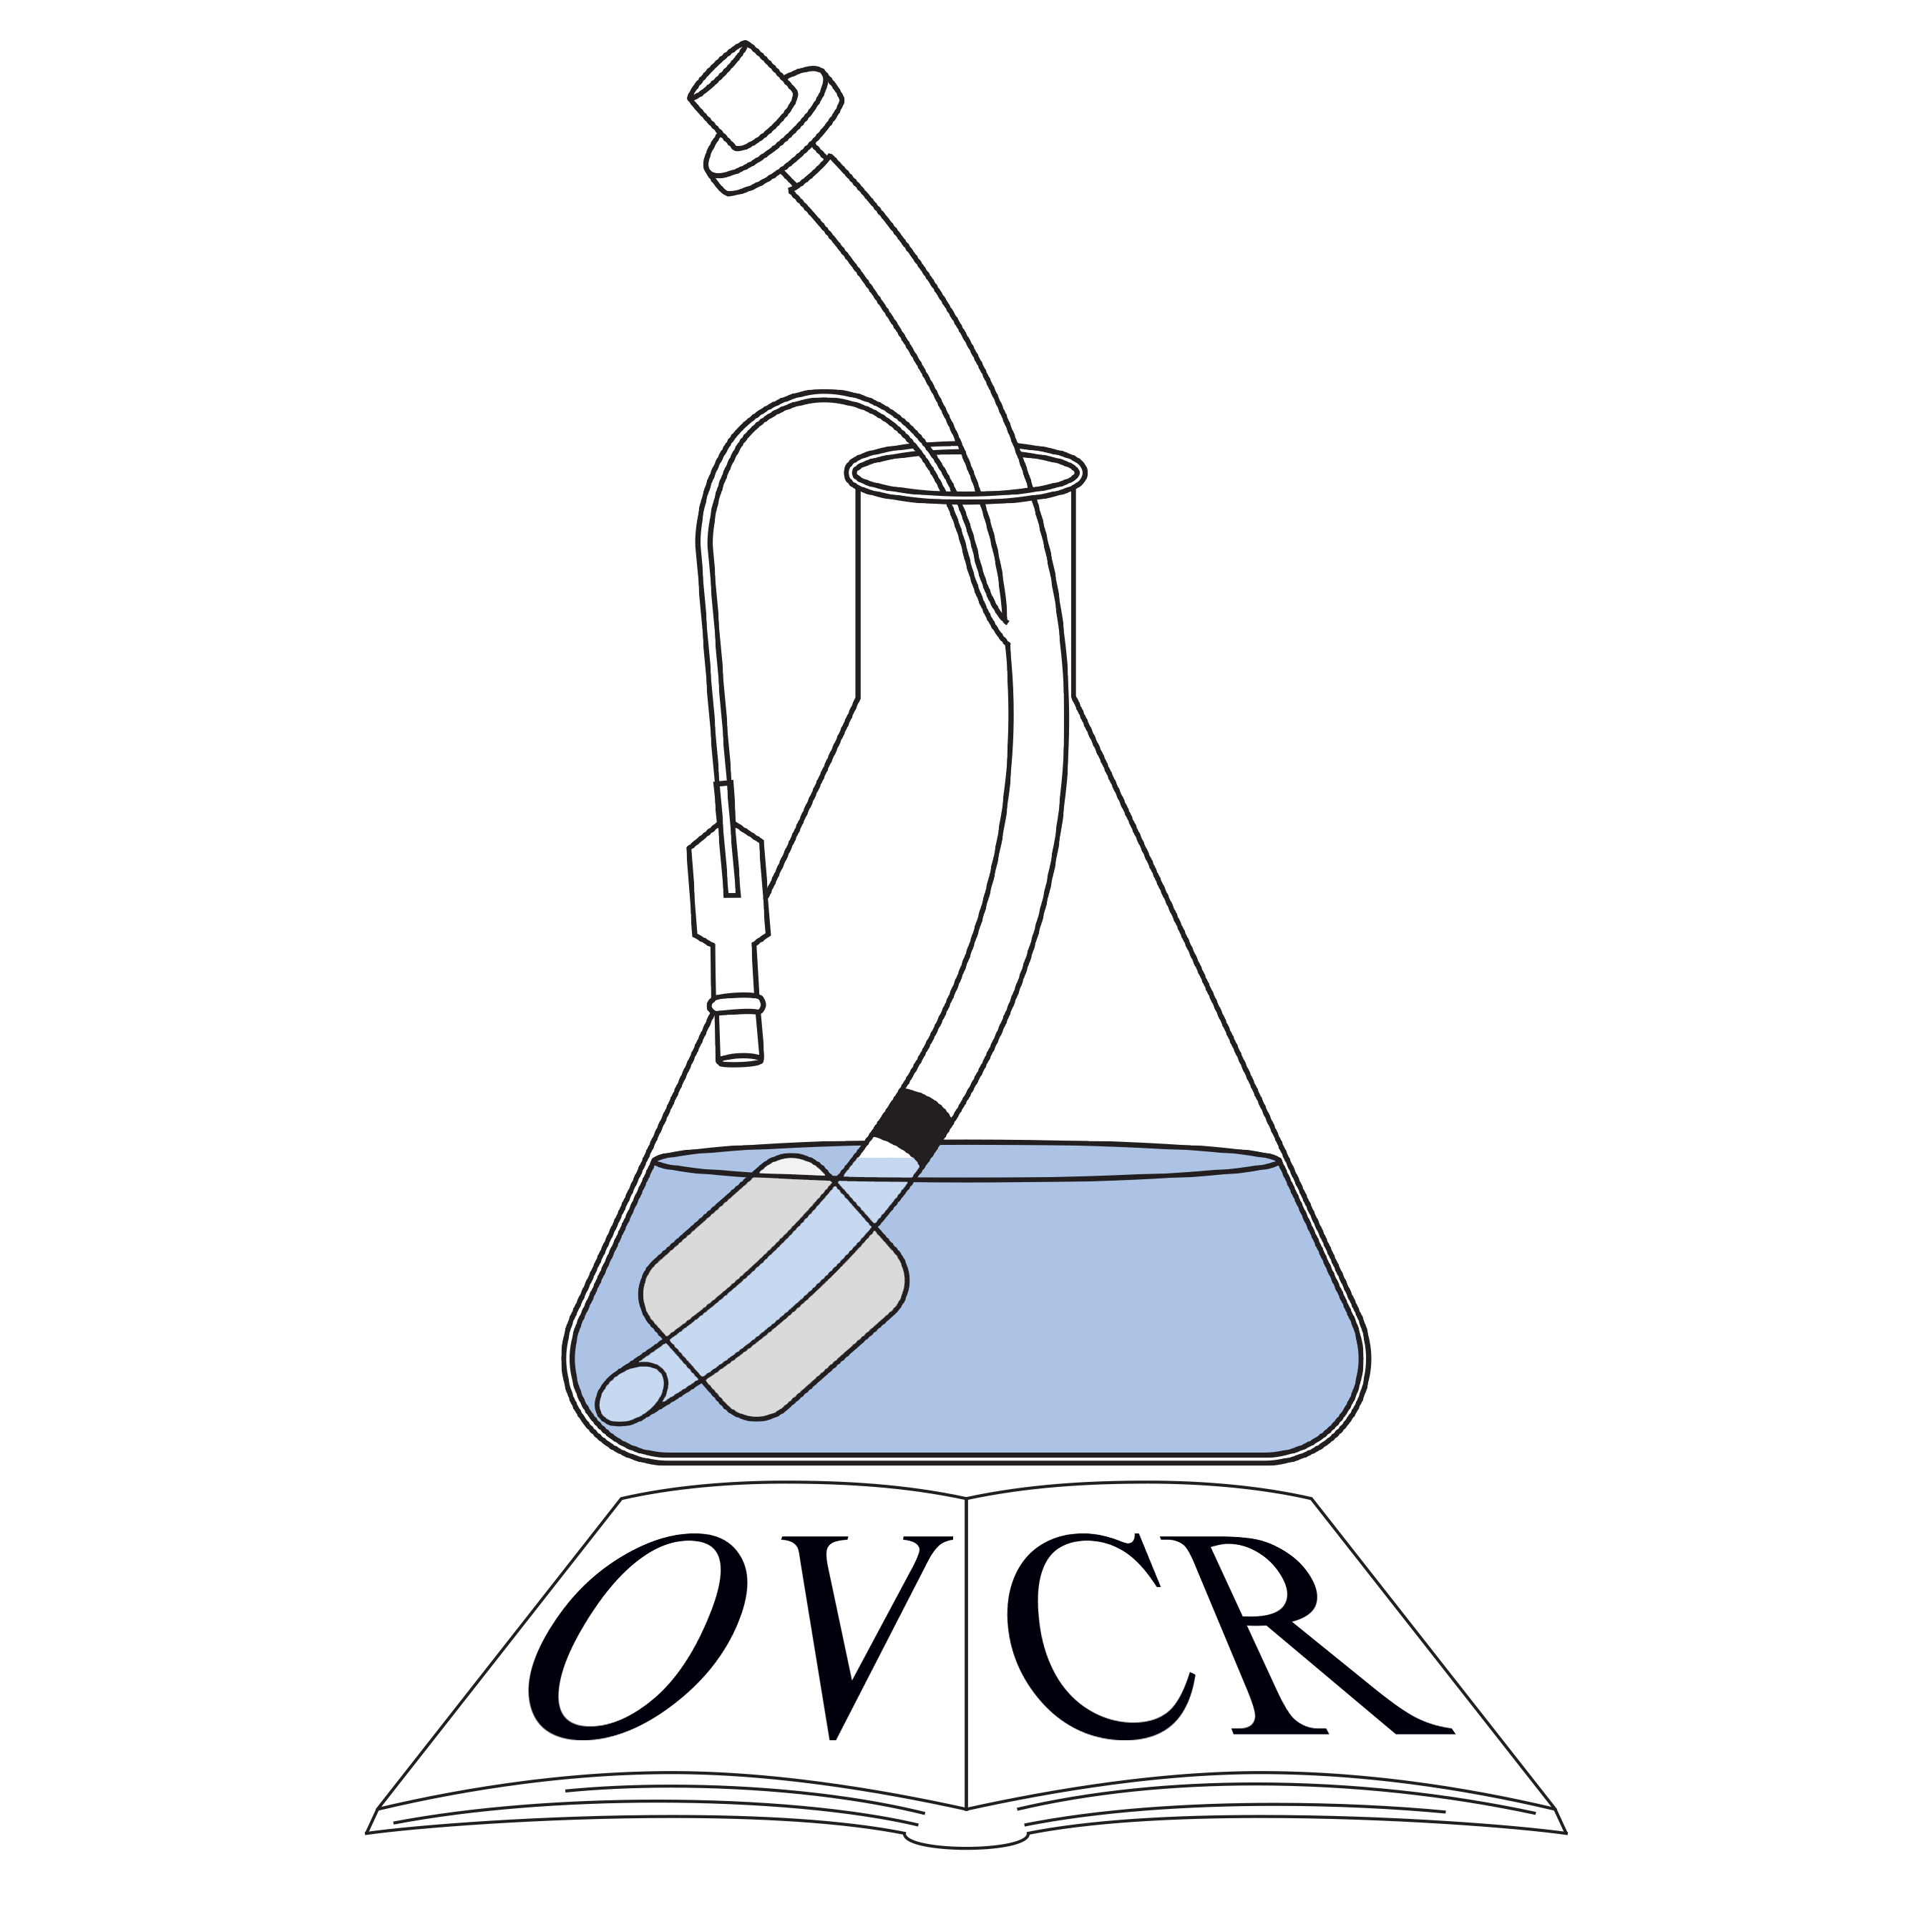 OVCR logo